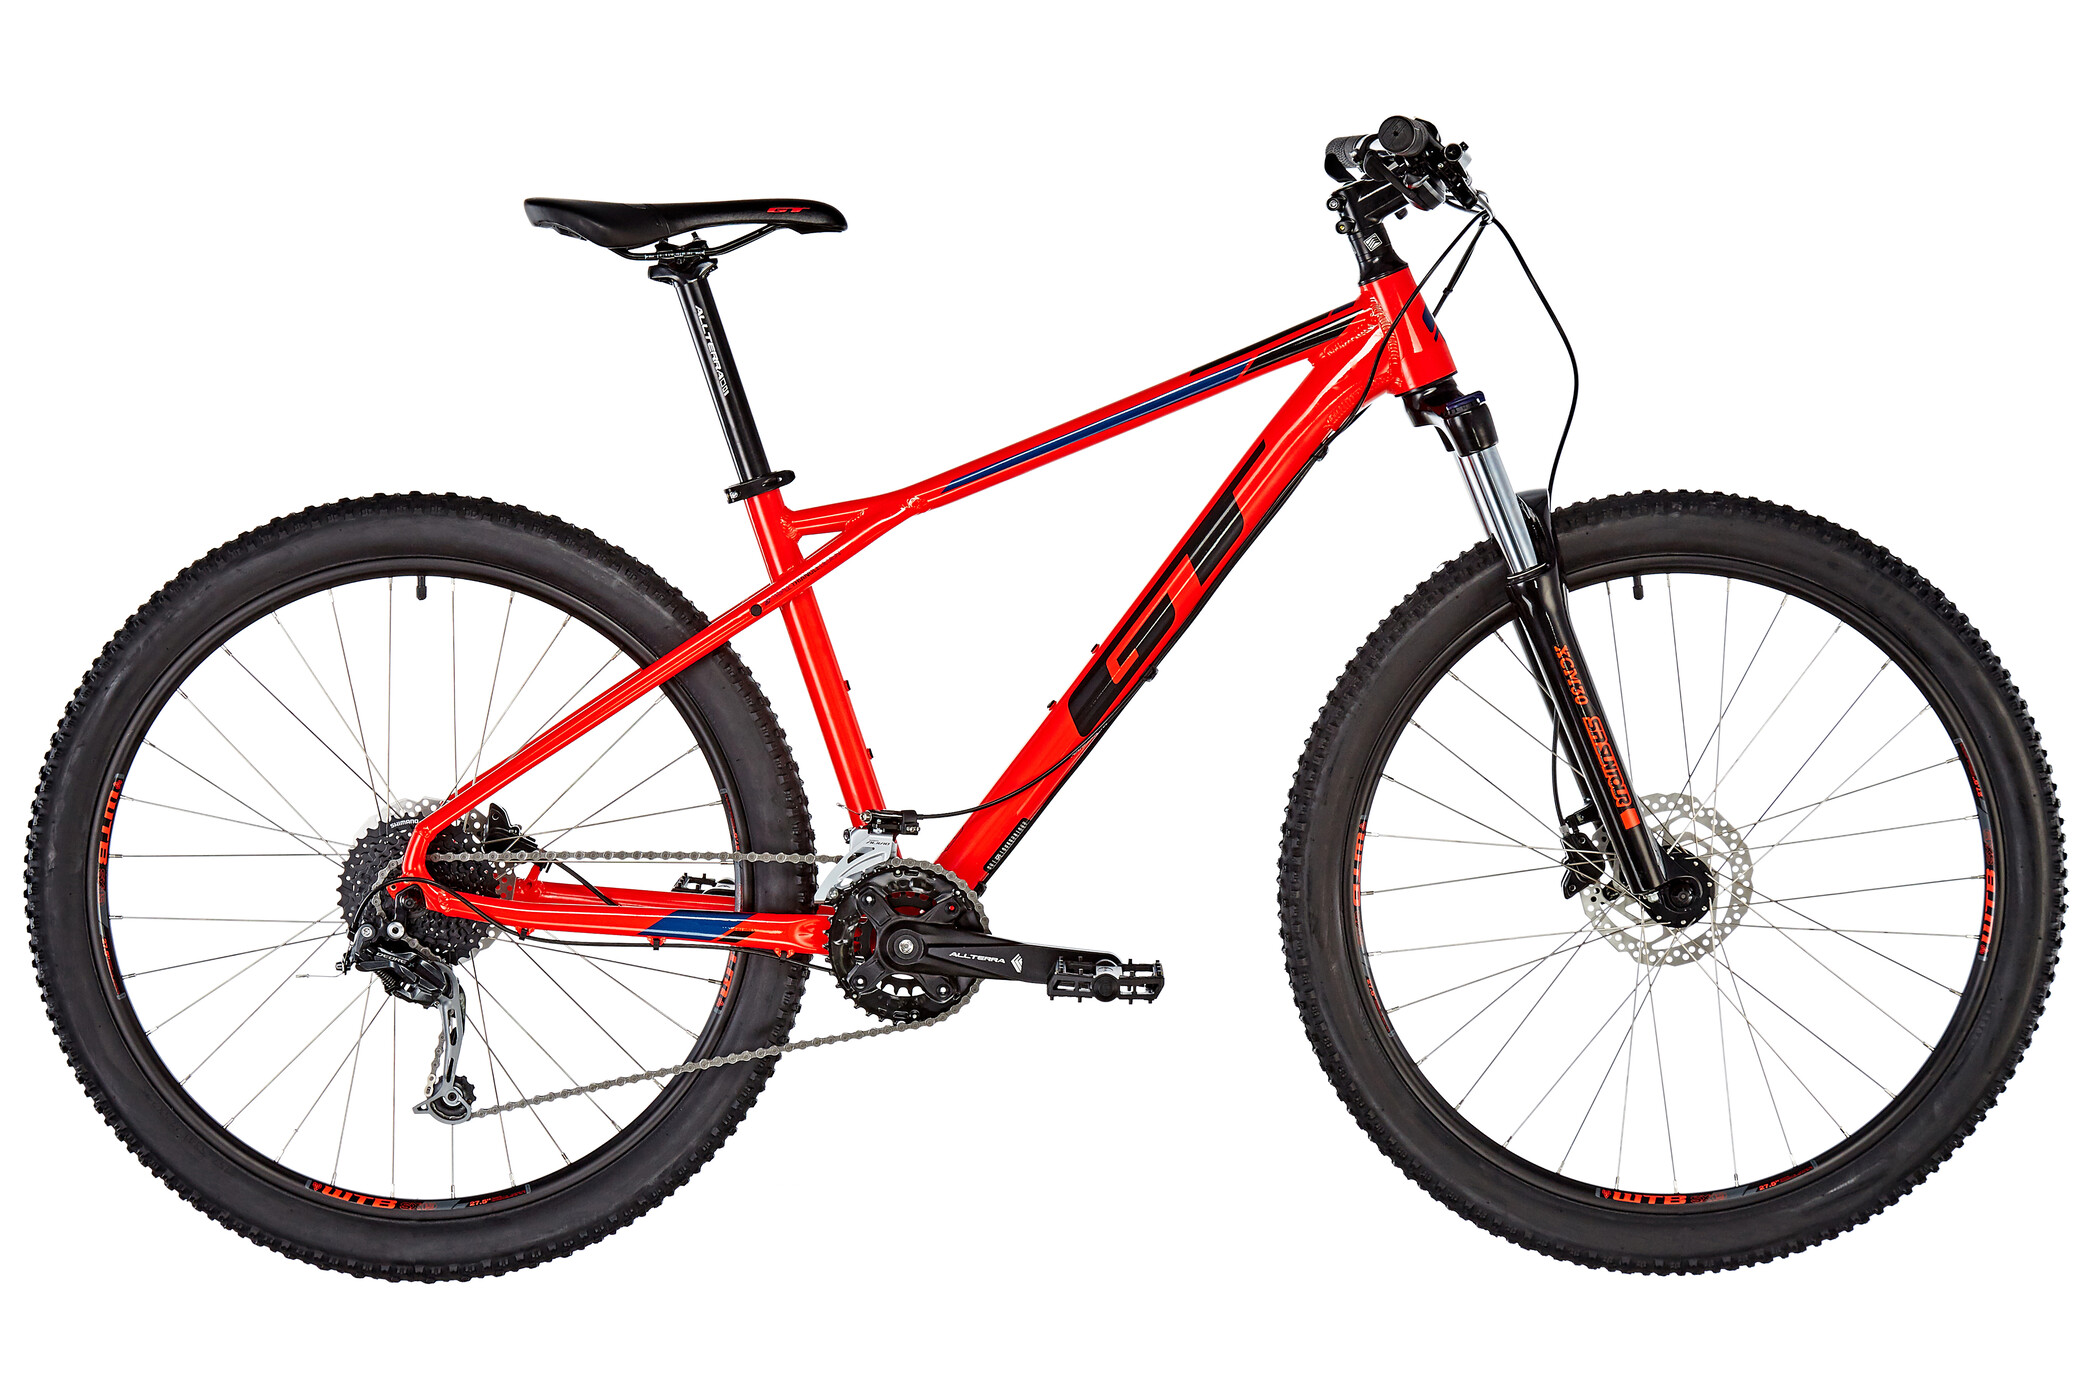 Carbon UD MTB Mountain XC DH Cycling Bike riser bar Handlebar 31.8*750 820 gloss